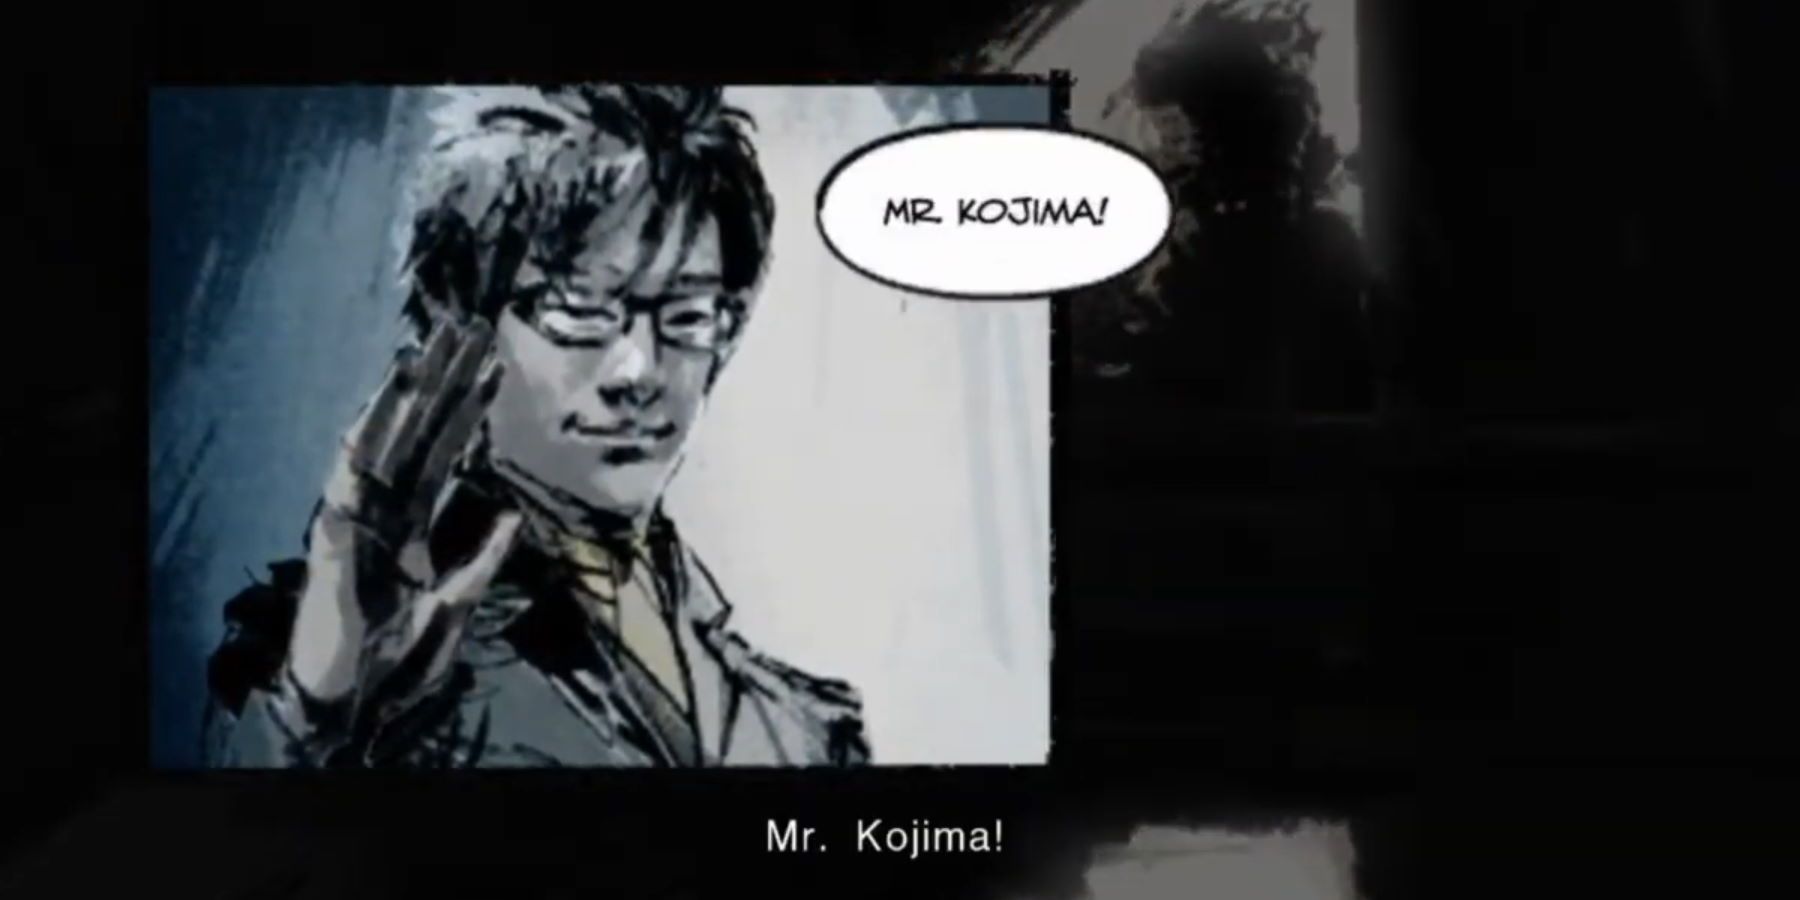 Hideo Kojima waving in a cutscene while Snake exclaims "Mr. Kojima!"